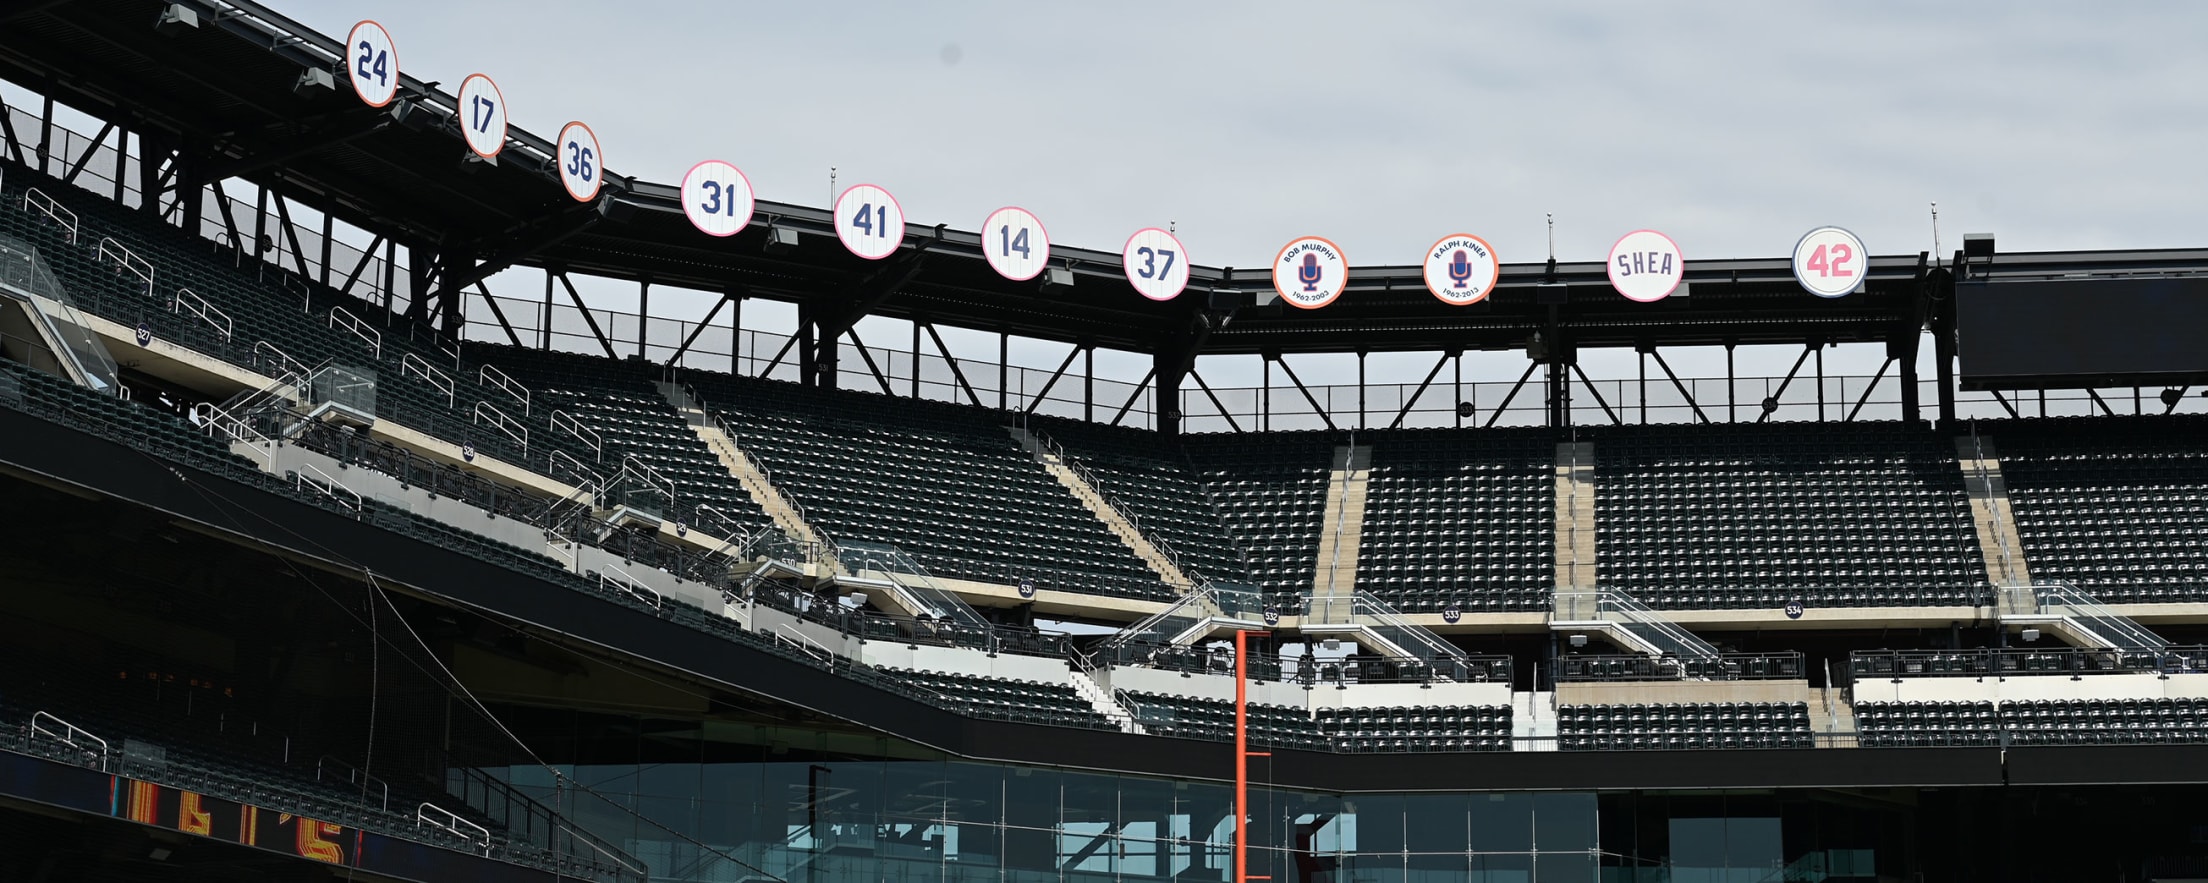 Mets retire Jerry Koosman's No. 36 in Citi Field ceremony